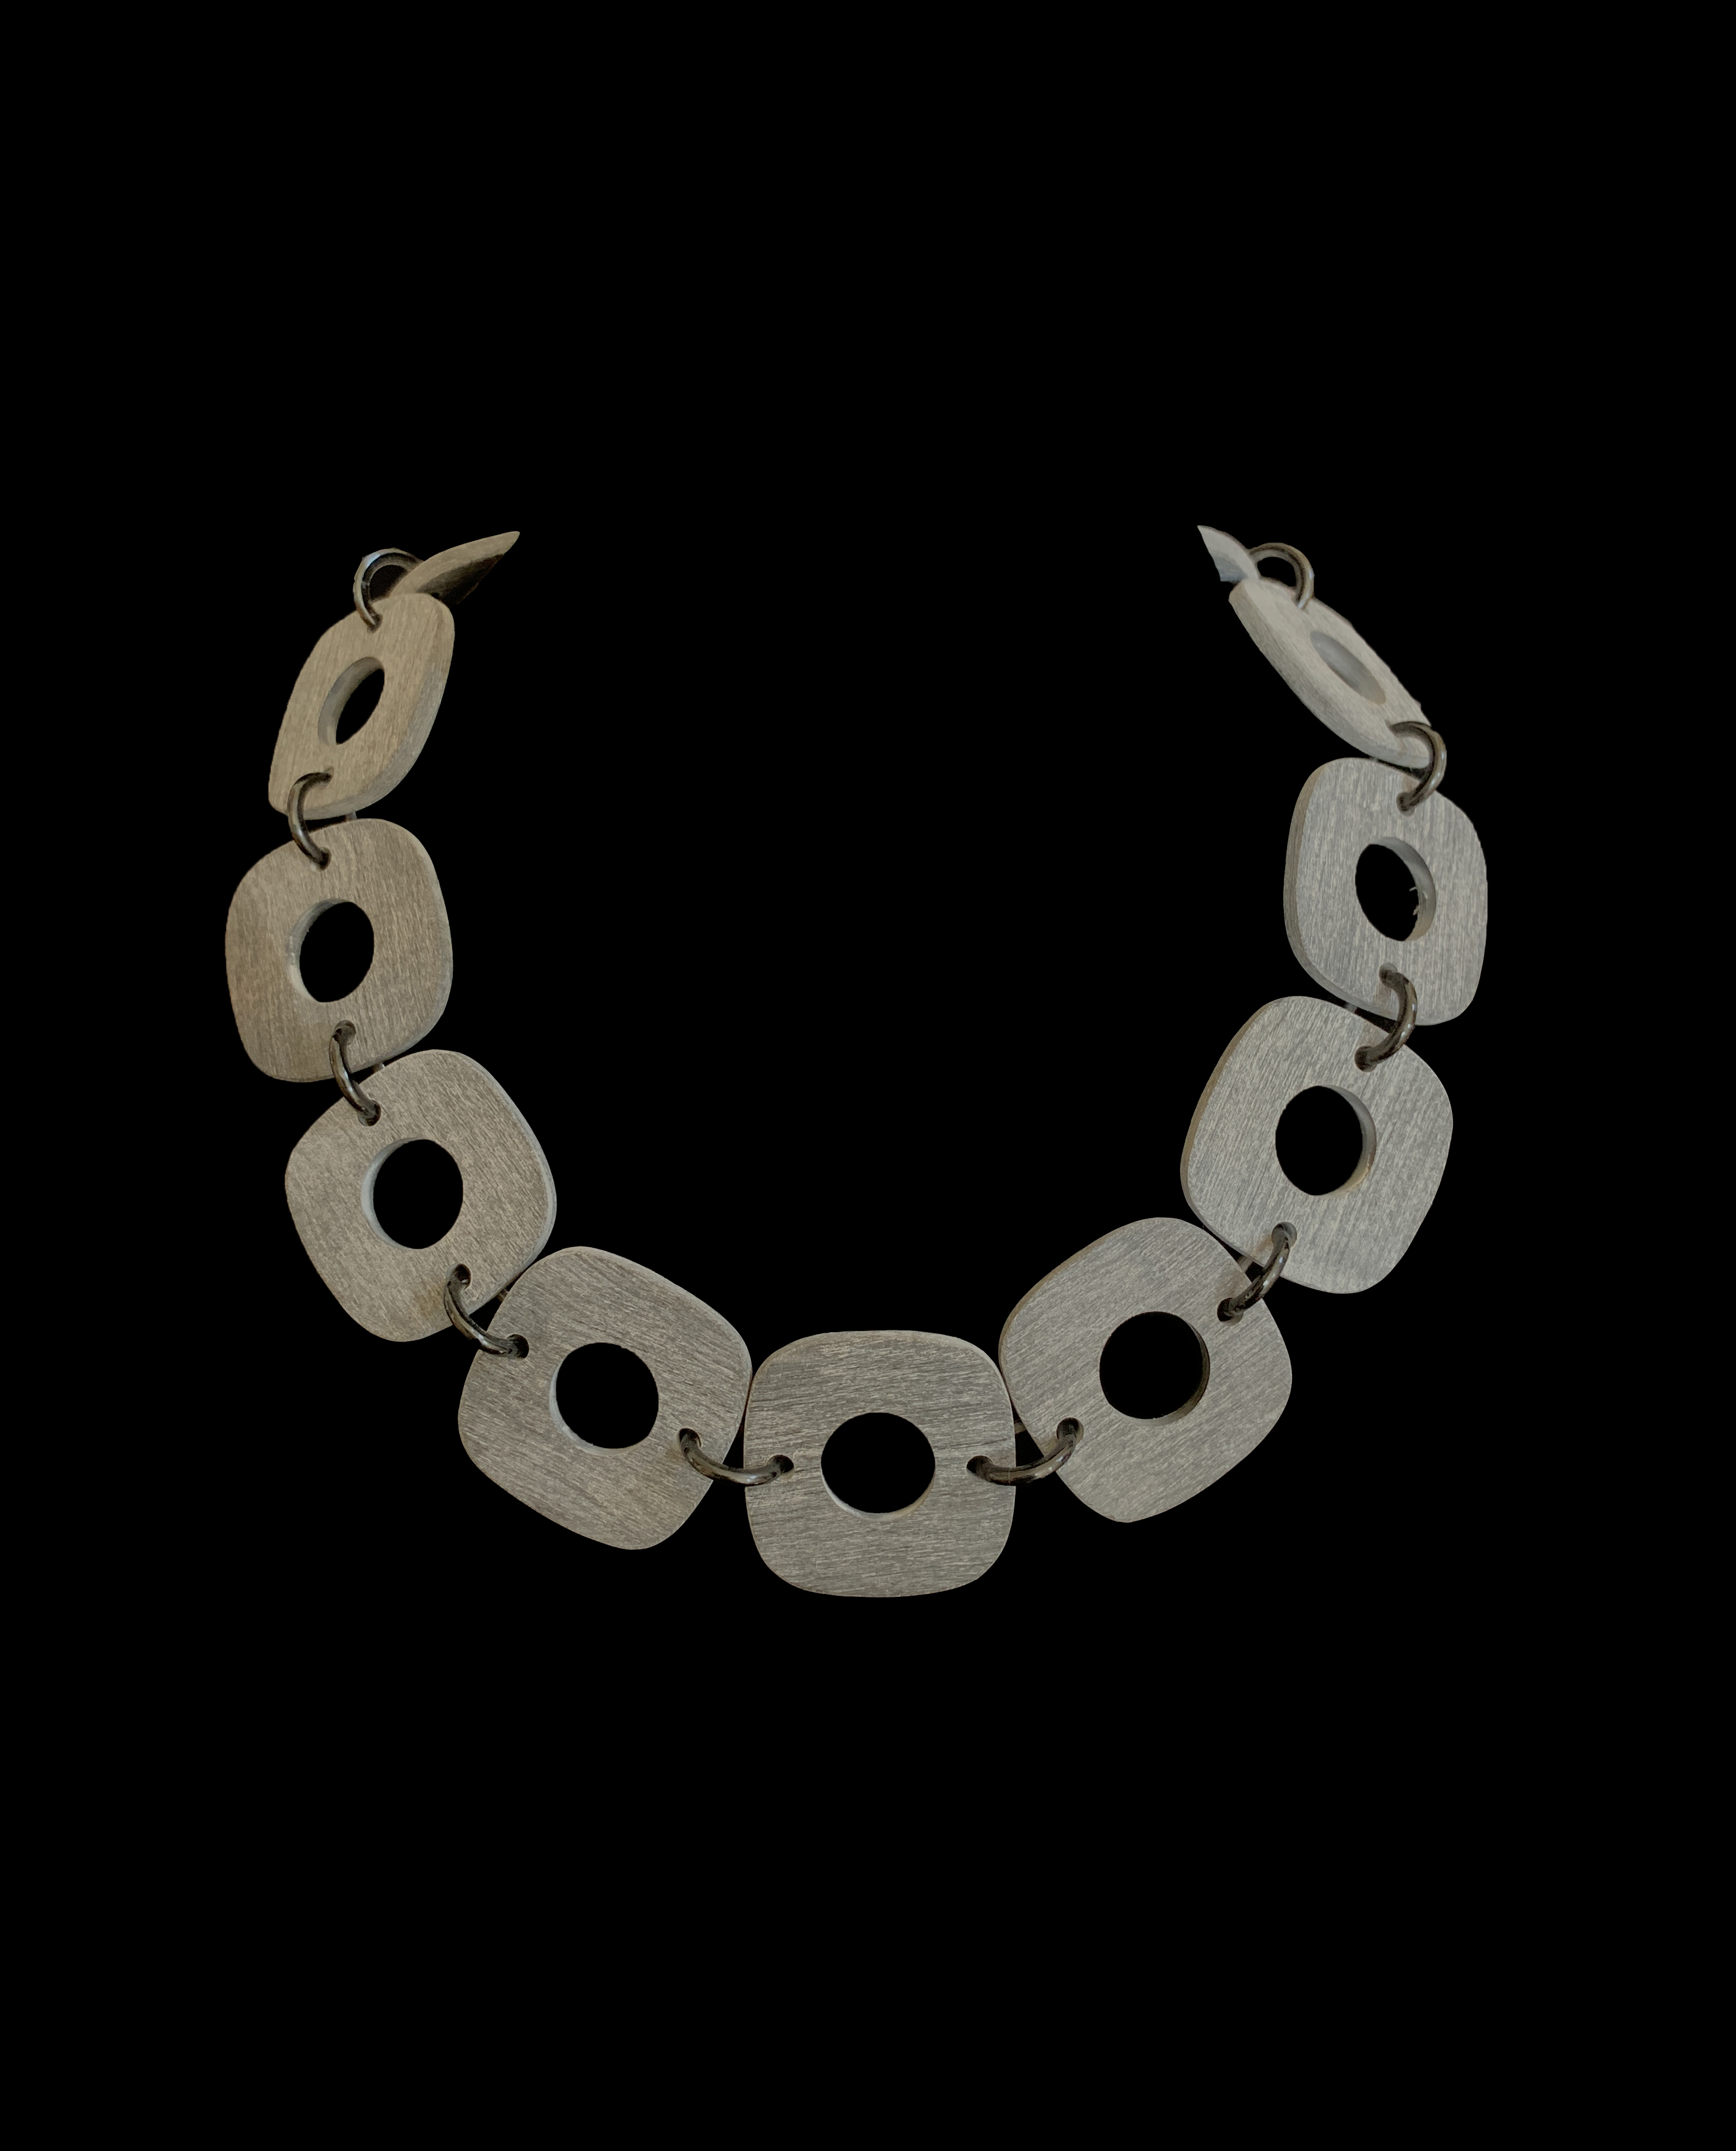 Matte Black Buffalo Horn Necklace